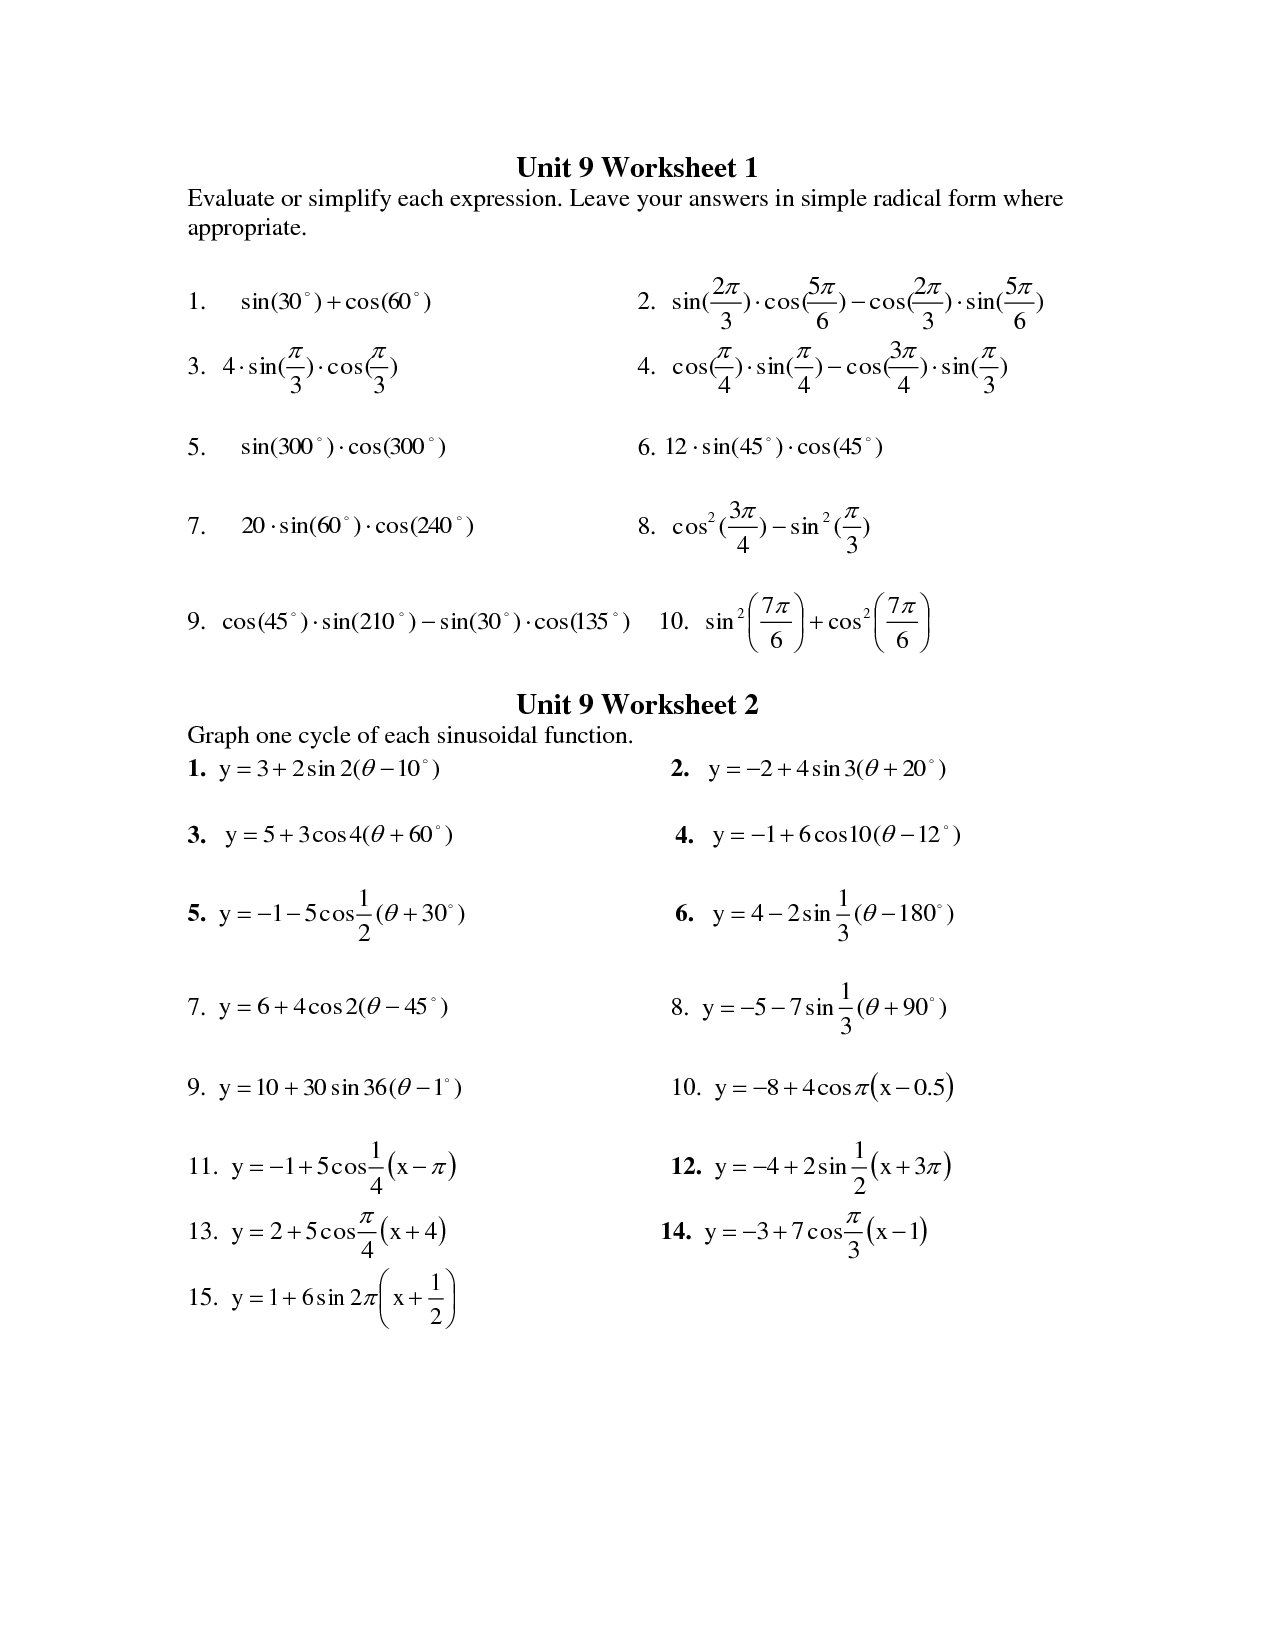 precalc lesson 0.3 homework answer key